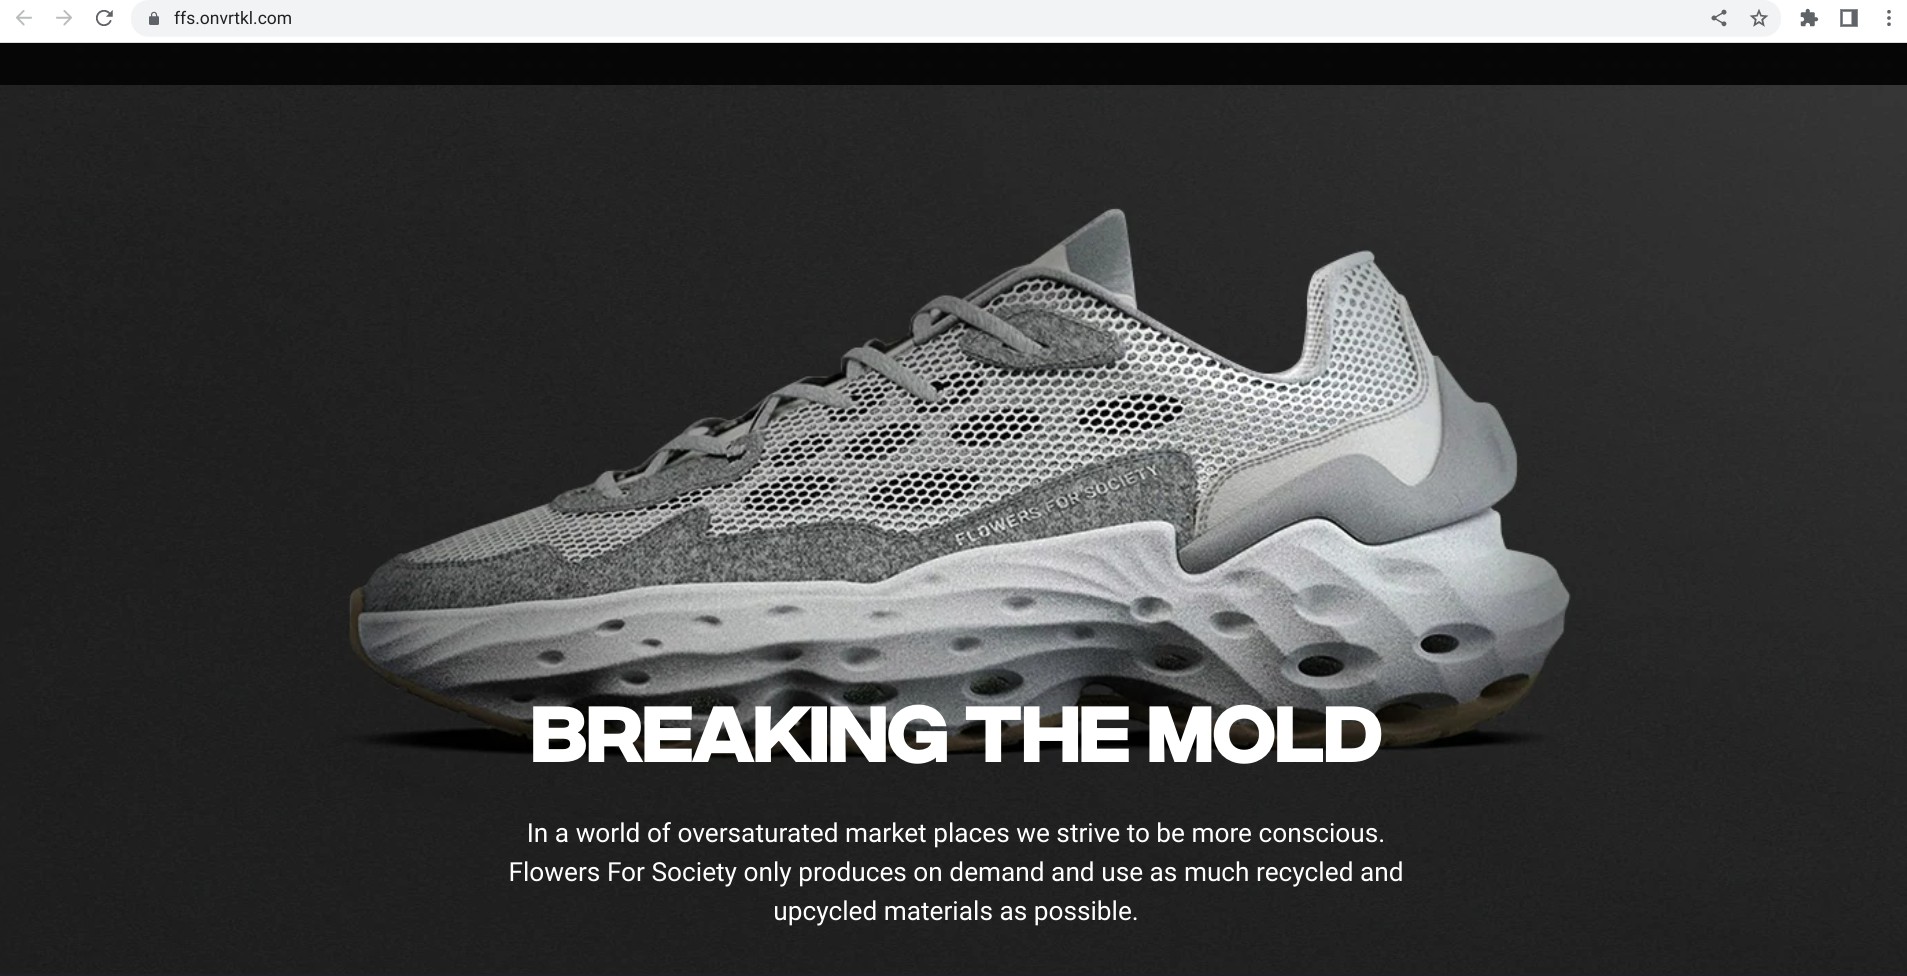 Screenshot of https://ffs.onvrtkl.com/ displaying a Seed.One sneaker